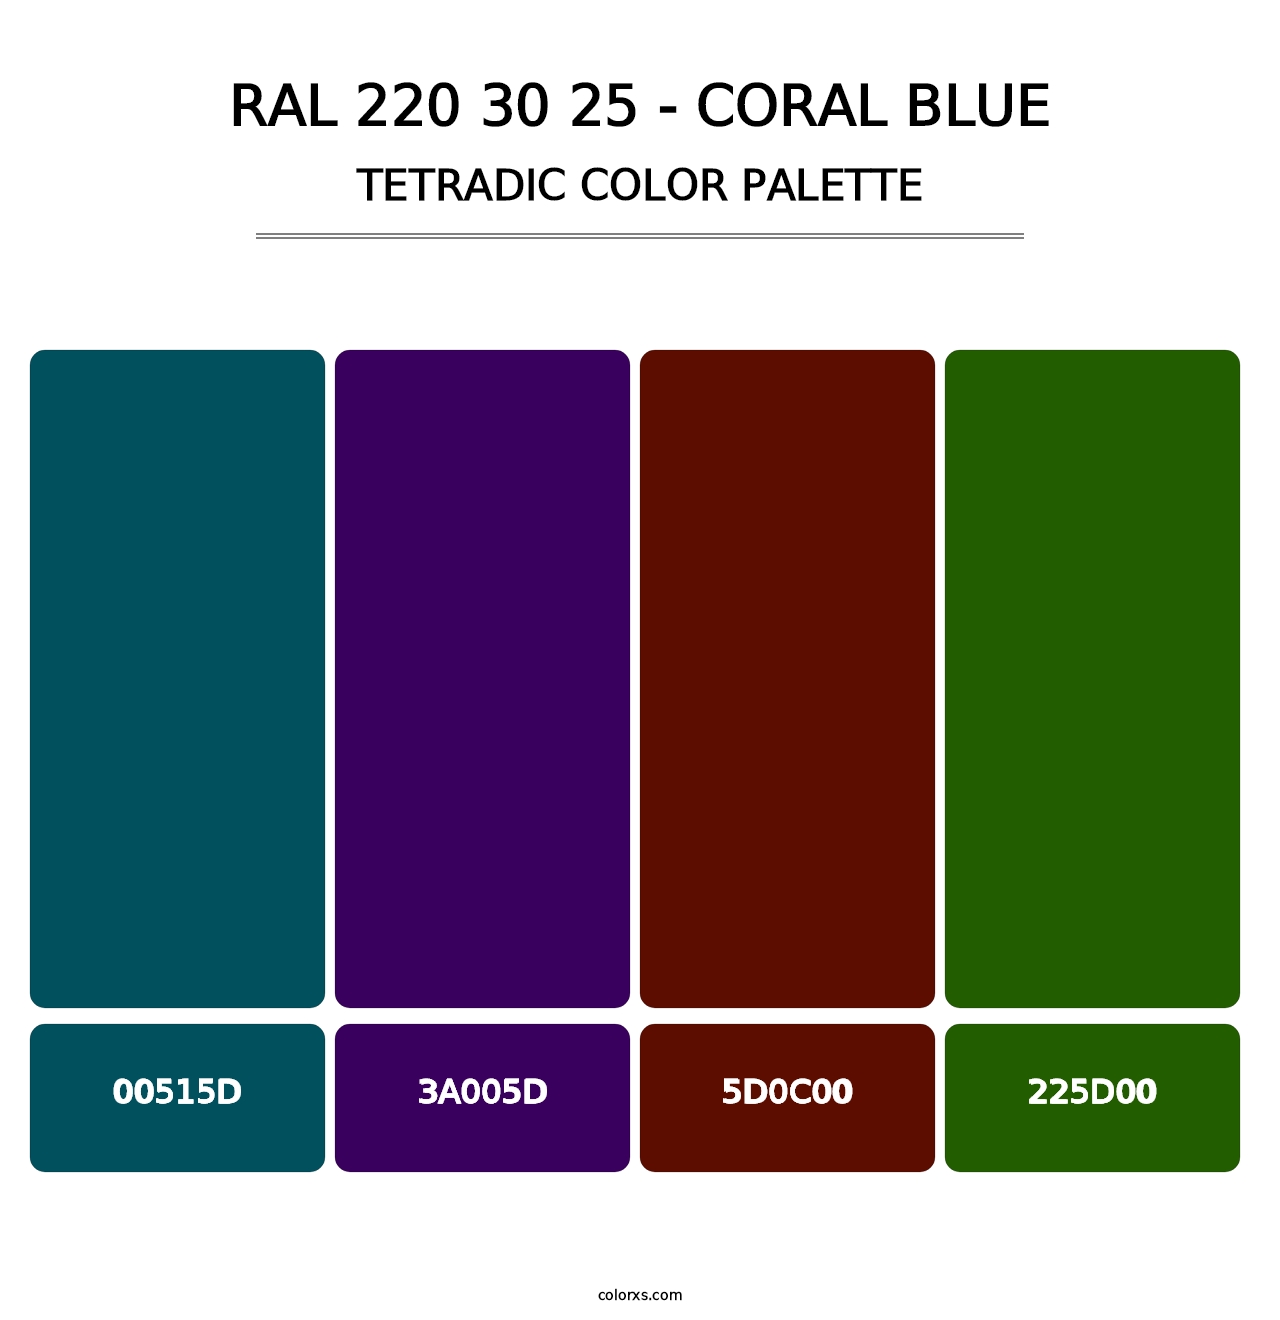 RAL 220 30 25 - Coral Blue - Tetradic Color Palette